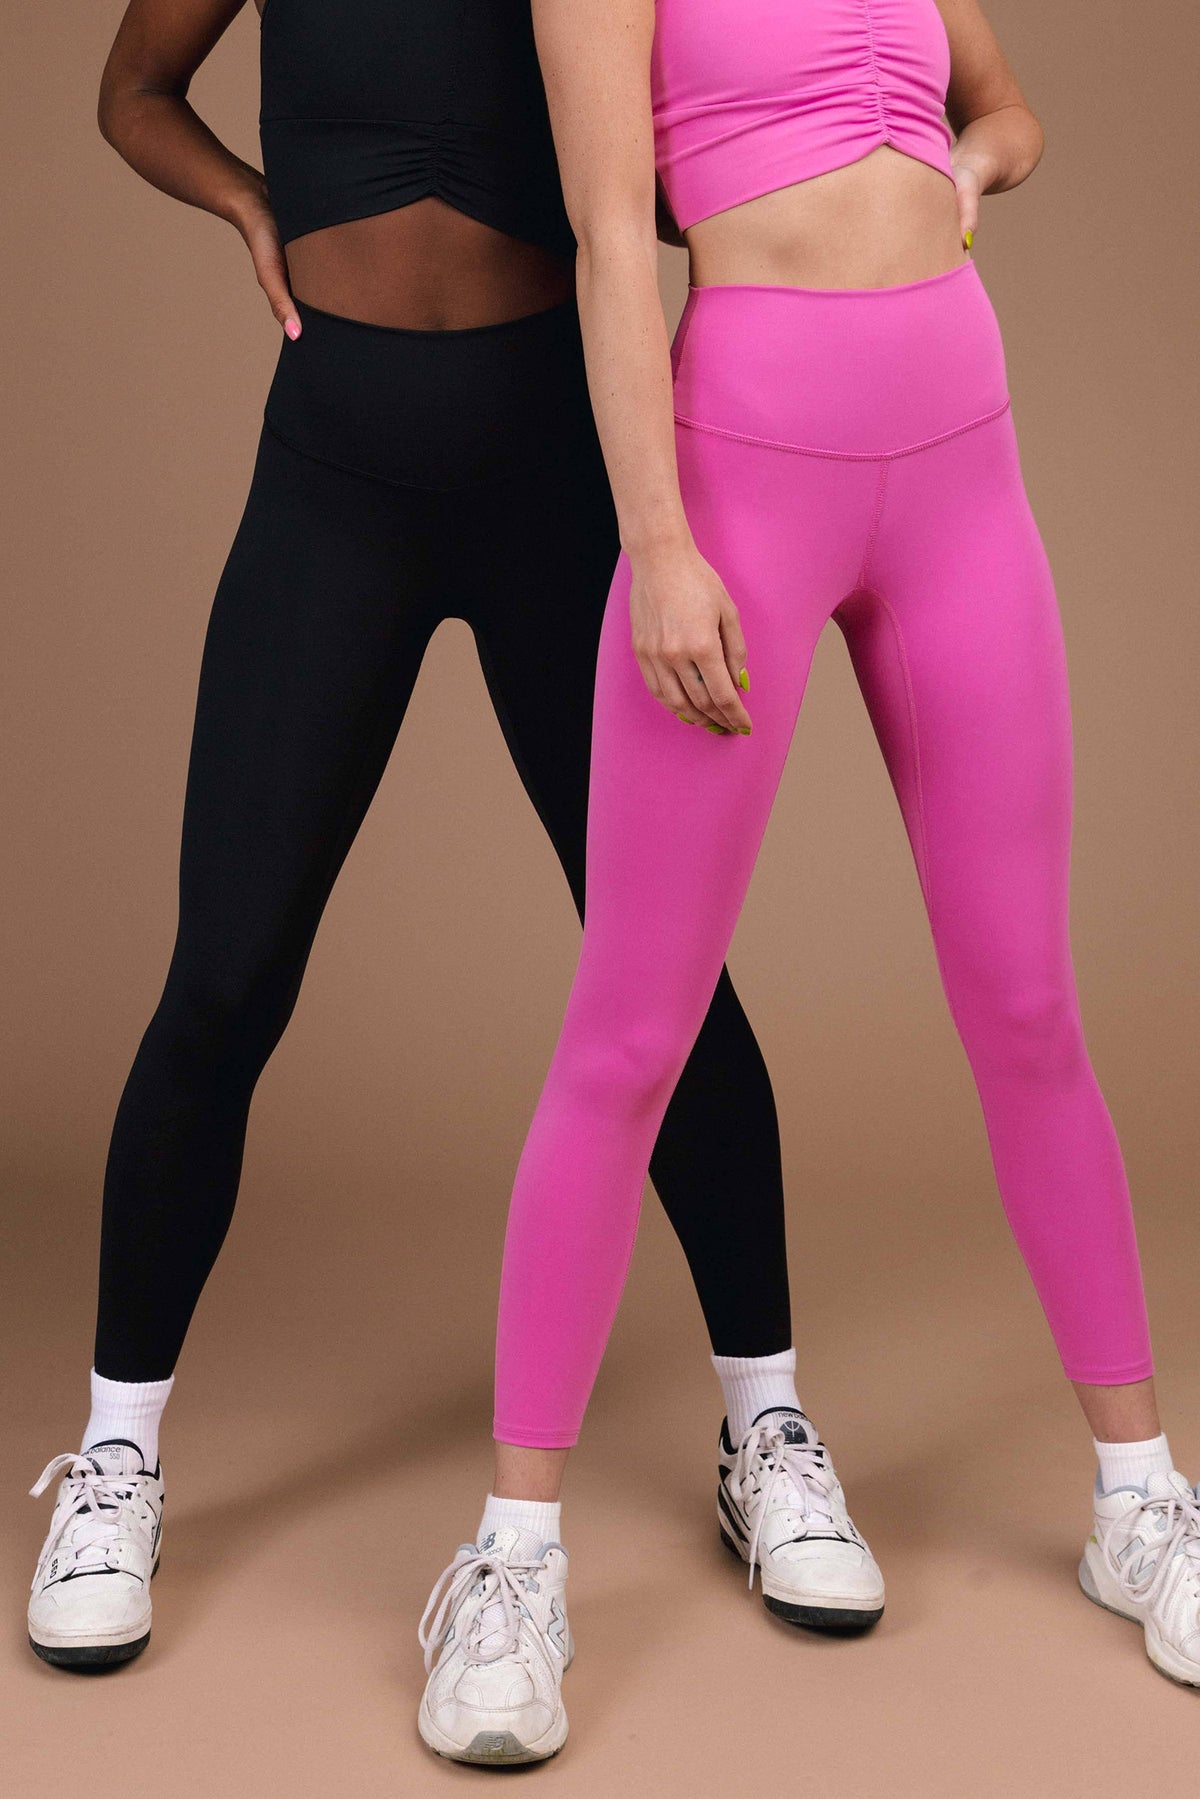 Women's Pink Workout Leggings  Pink Dance Leggings - Five The Label